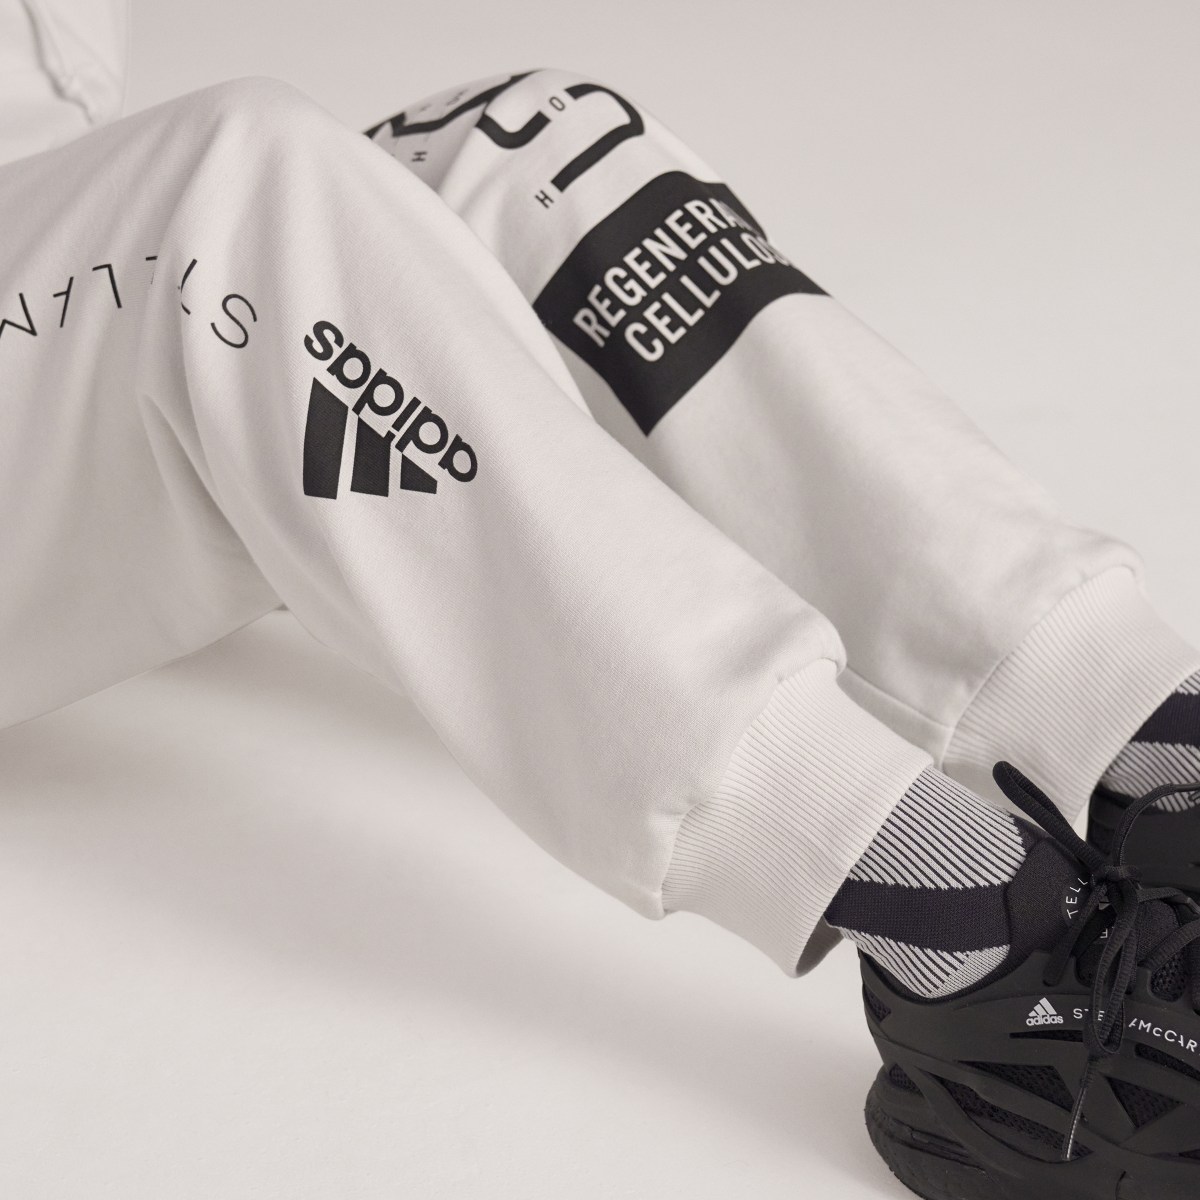 Adidas by Stella McCartney Sportswear Regenerated Cellulose Hose – Genderneutral. 10